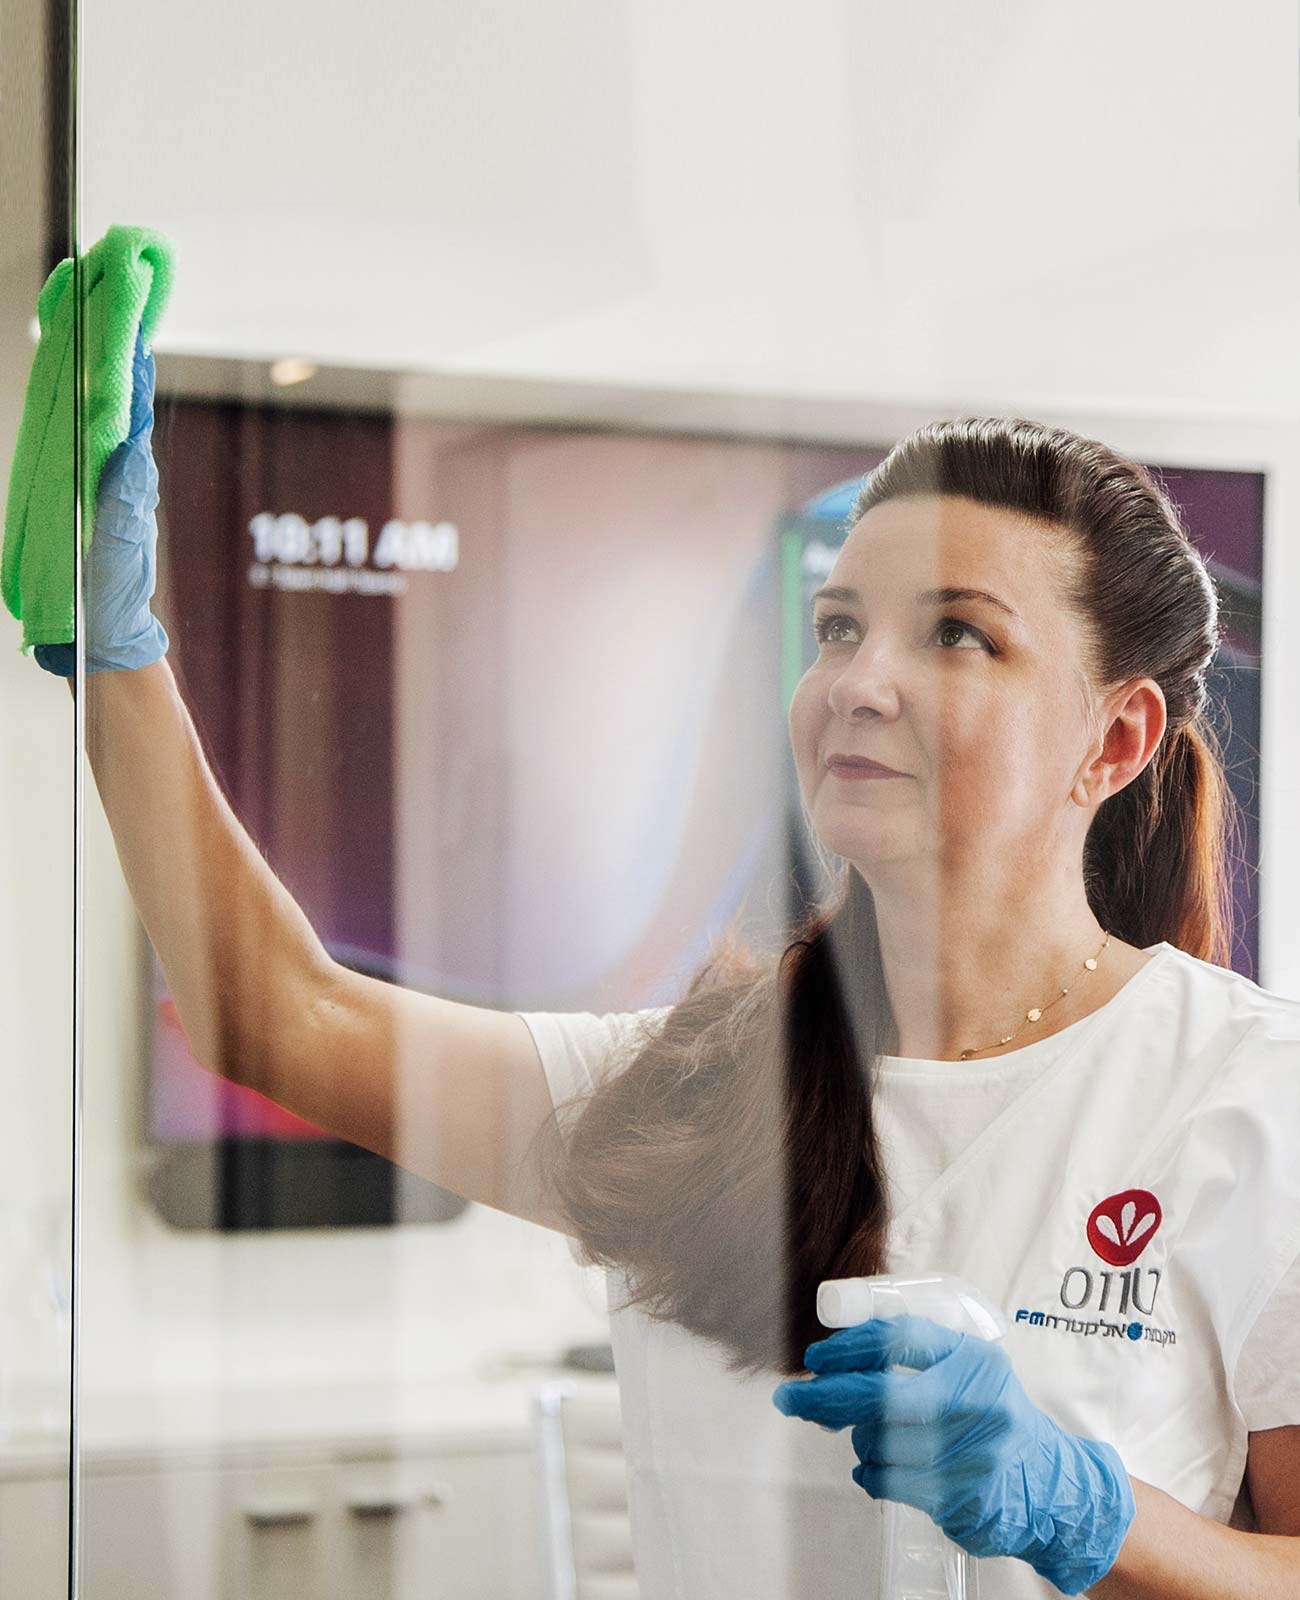 Brunette woman in Tavas uniform cleaning glass